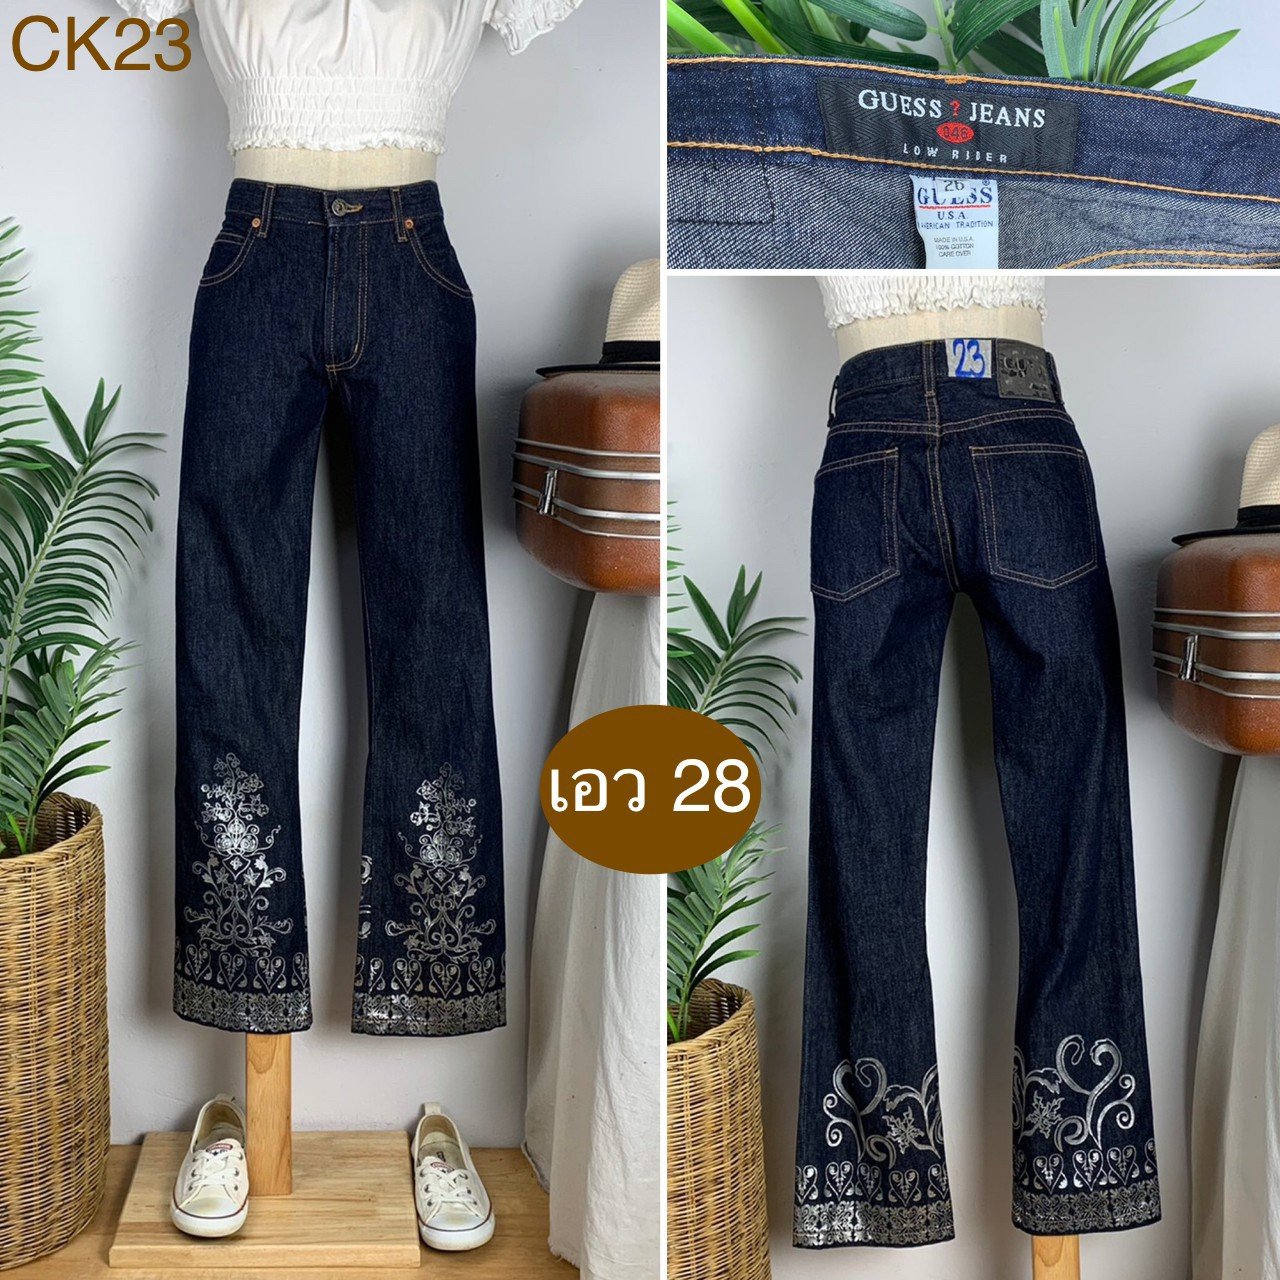 ♥️ รหัสCK23 ▪️ป้าย GUESS Jeans  ▪️ เอว 28" สะโพก 36" ต้นขา 20" ▪️เป้า 9.5" ยาว 38" (นิ้ว)